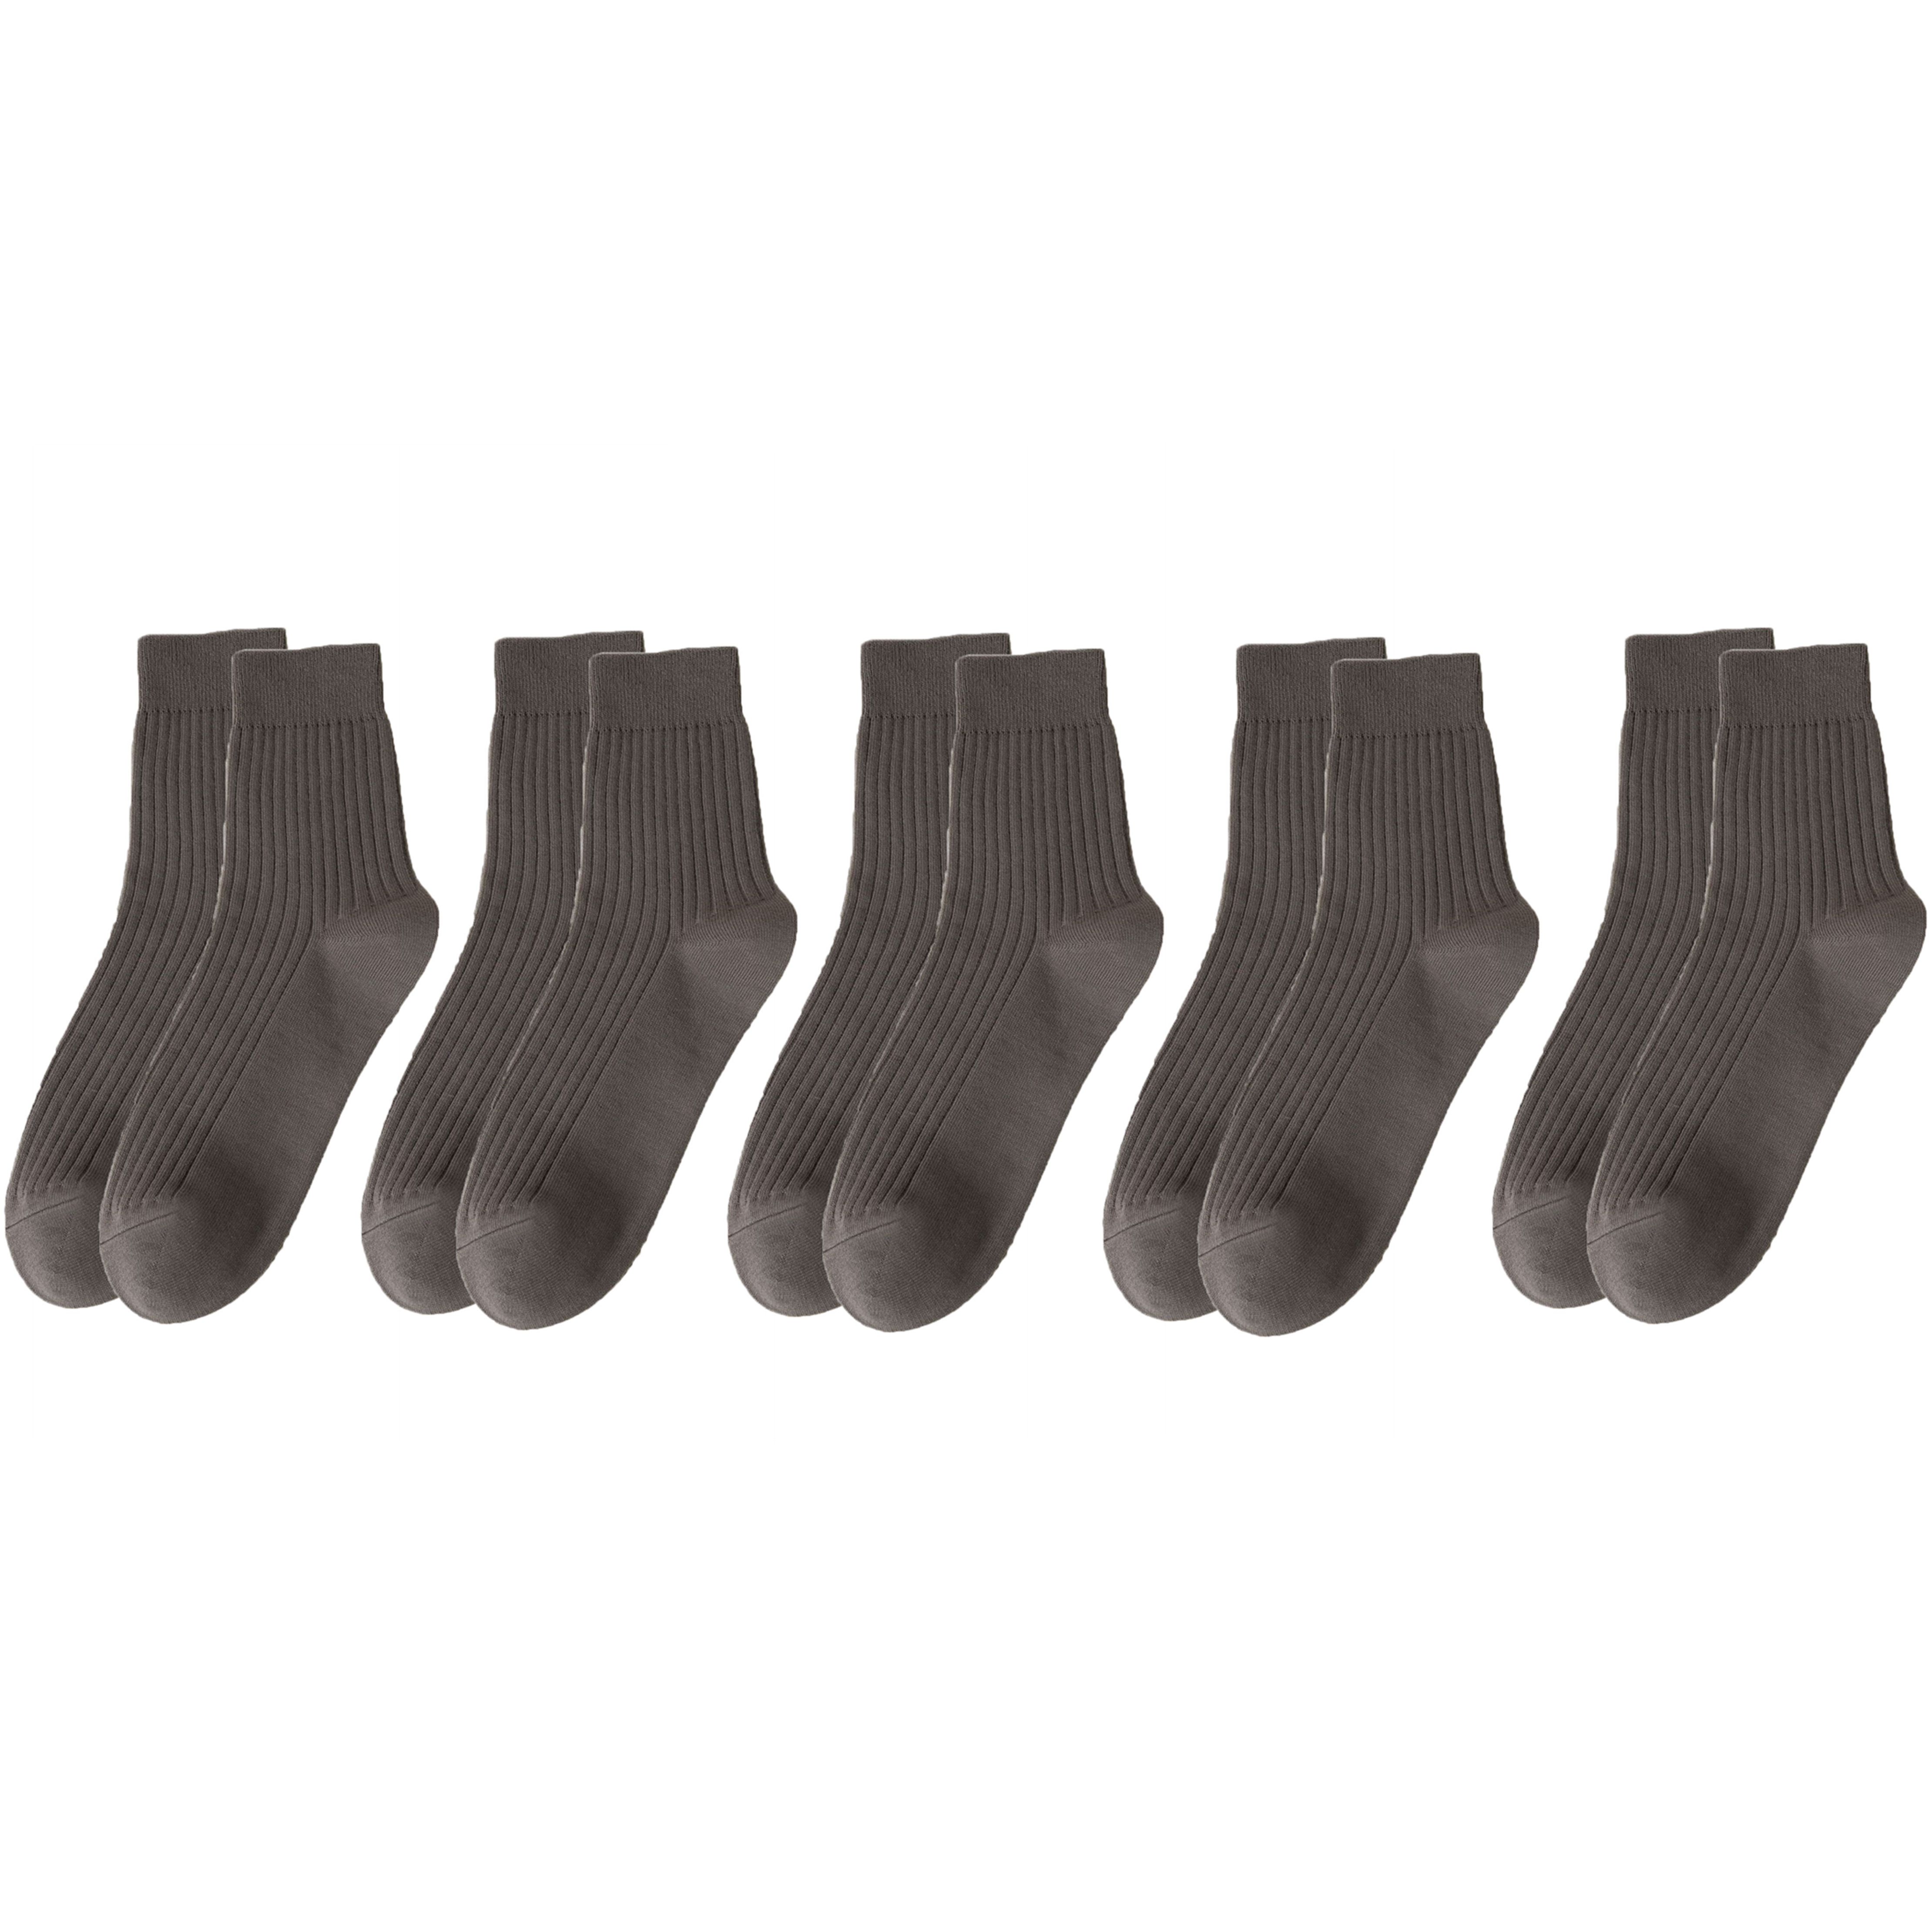 5 Pairs Cotton Socks for Men Dark Grey Durable Socks Resistant to Pilling Socks Medium Length